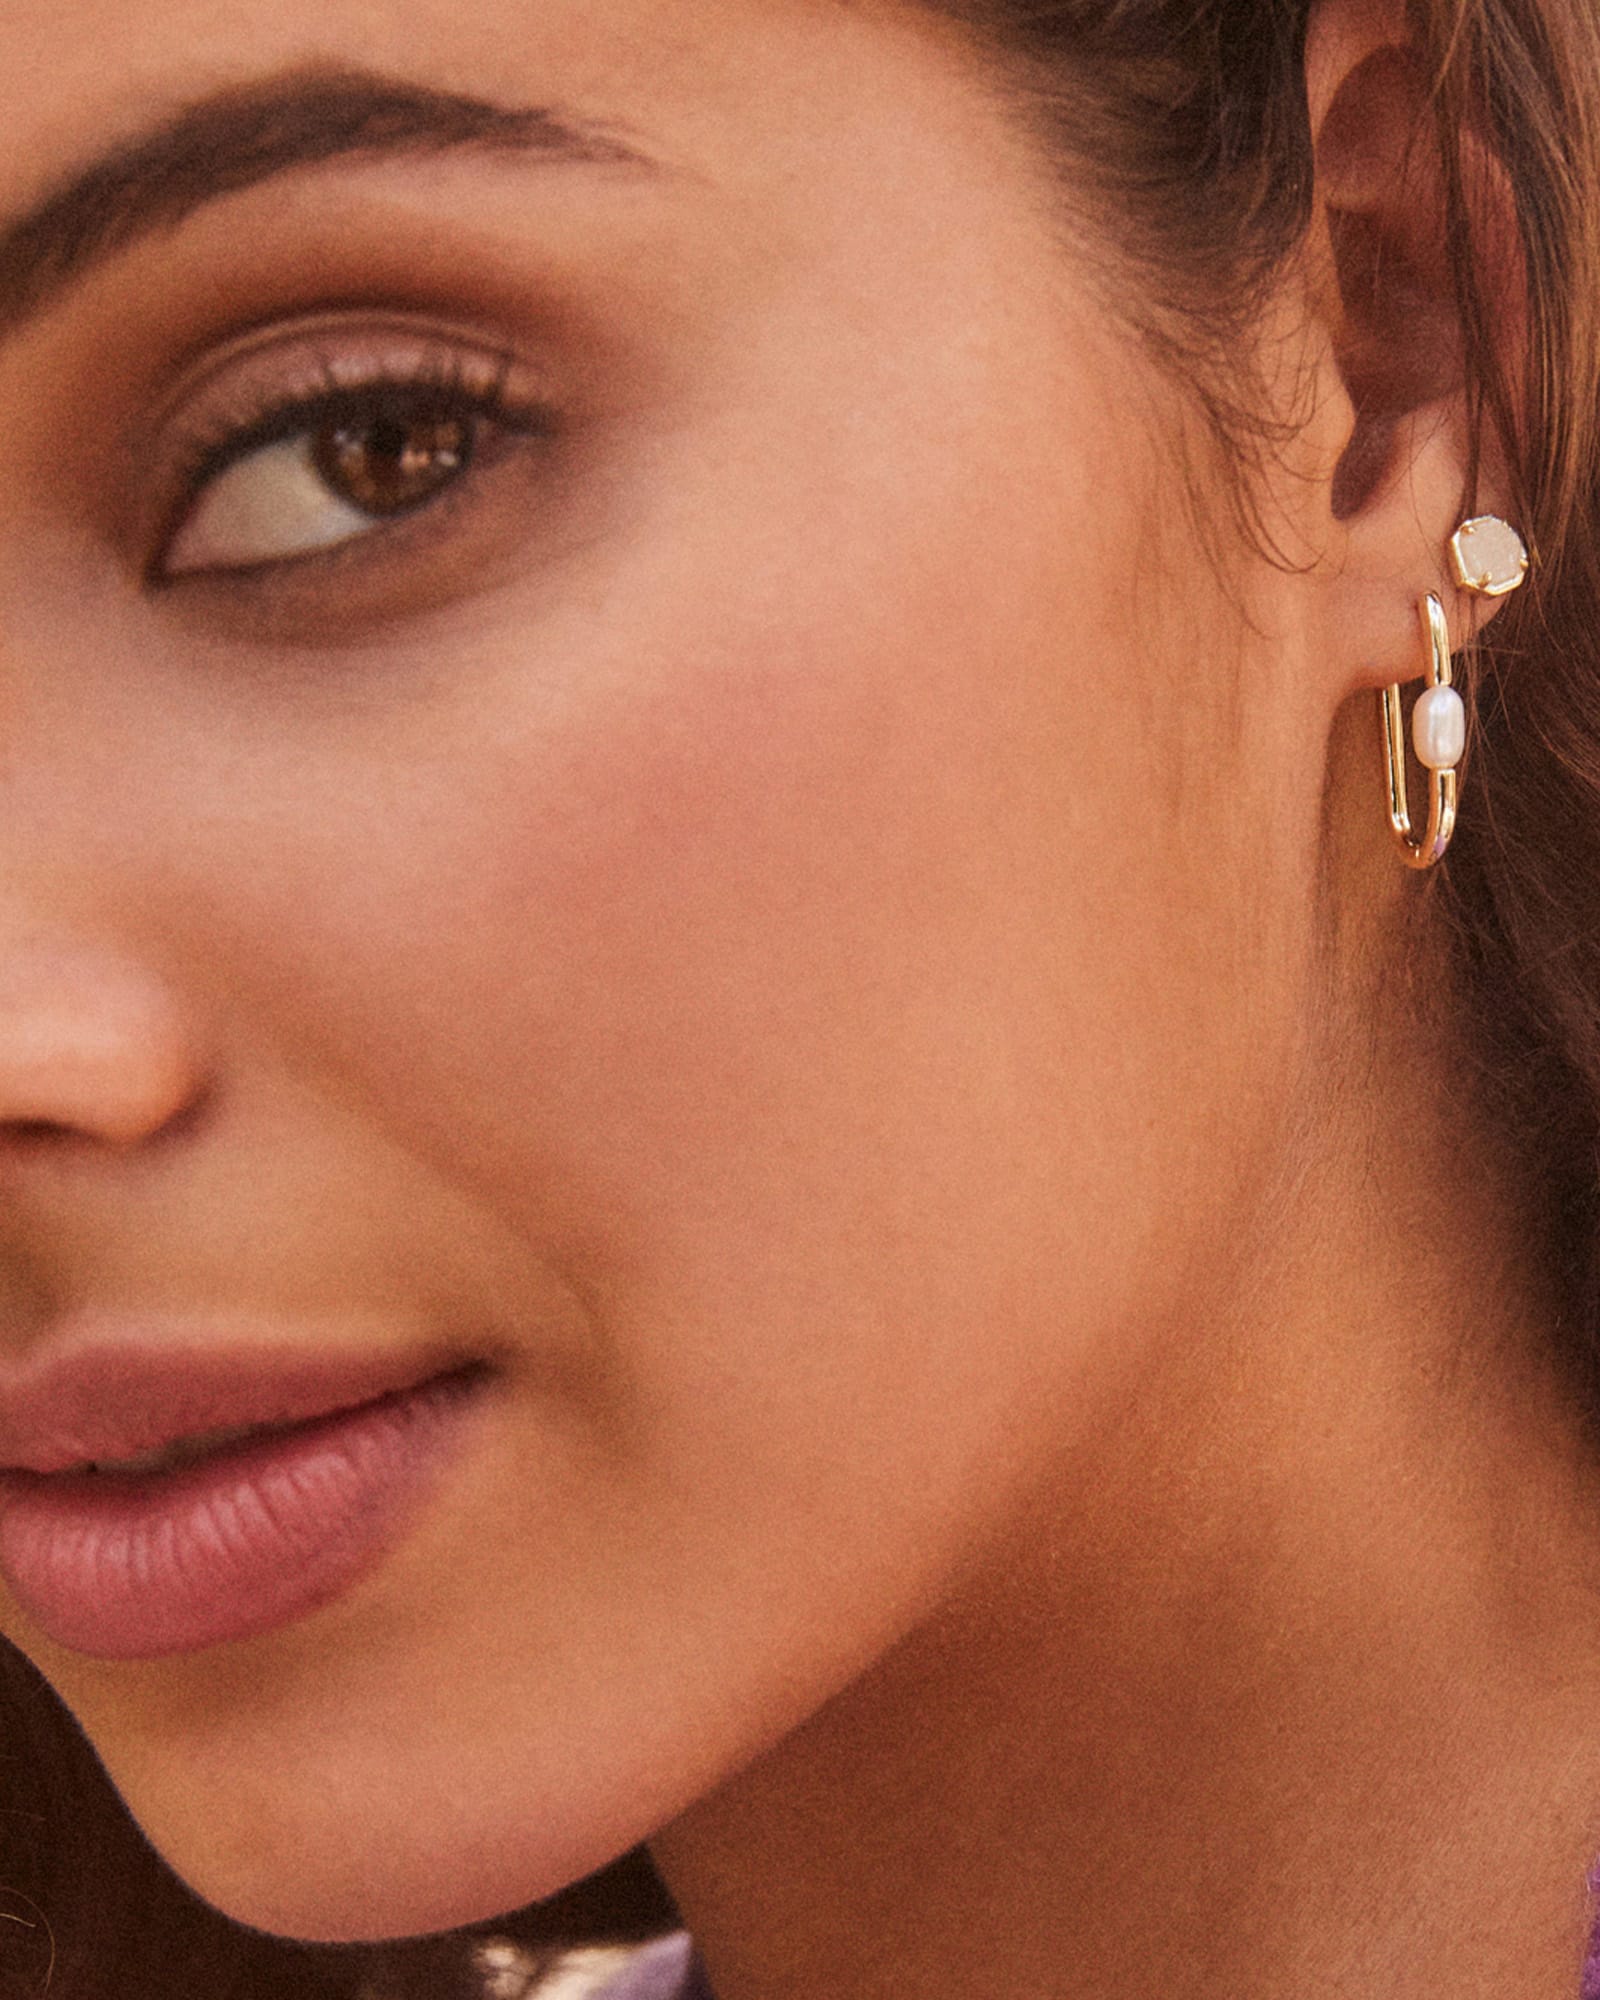 Nola Gold Stud Earrings in Iridescent Drusy | Kendra Scott